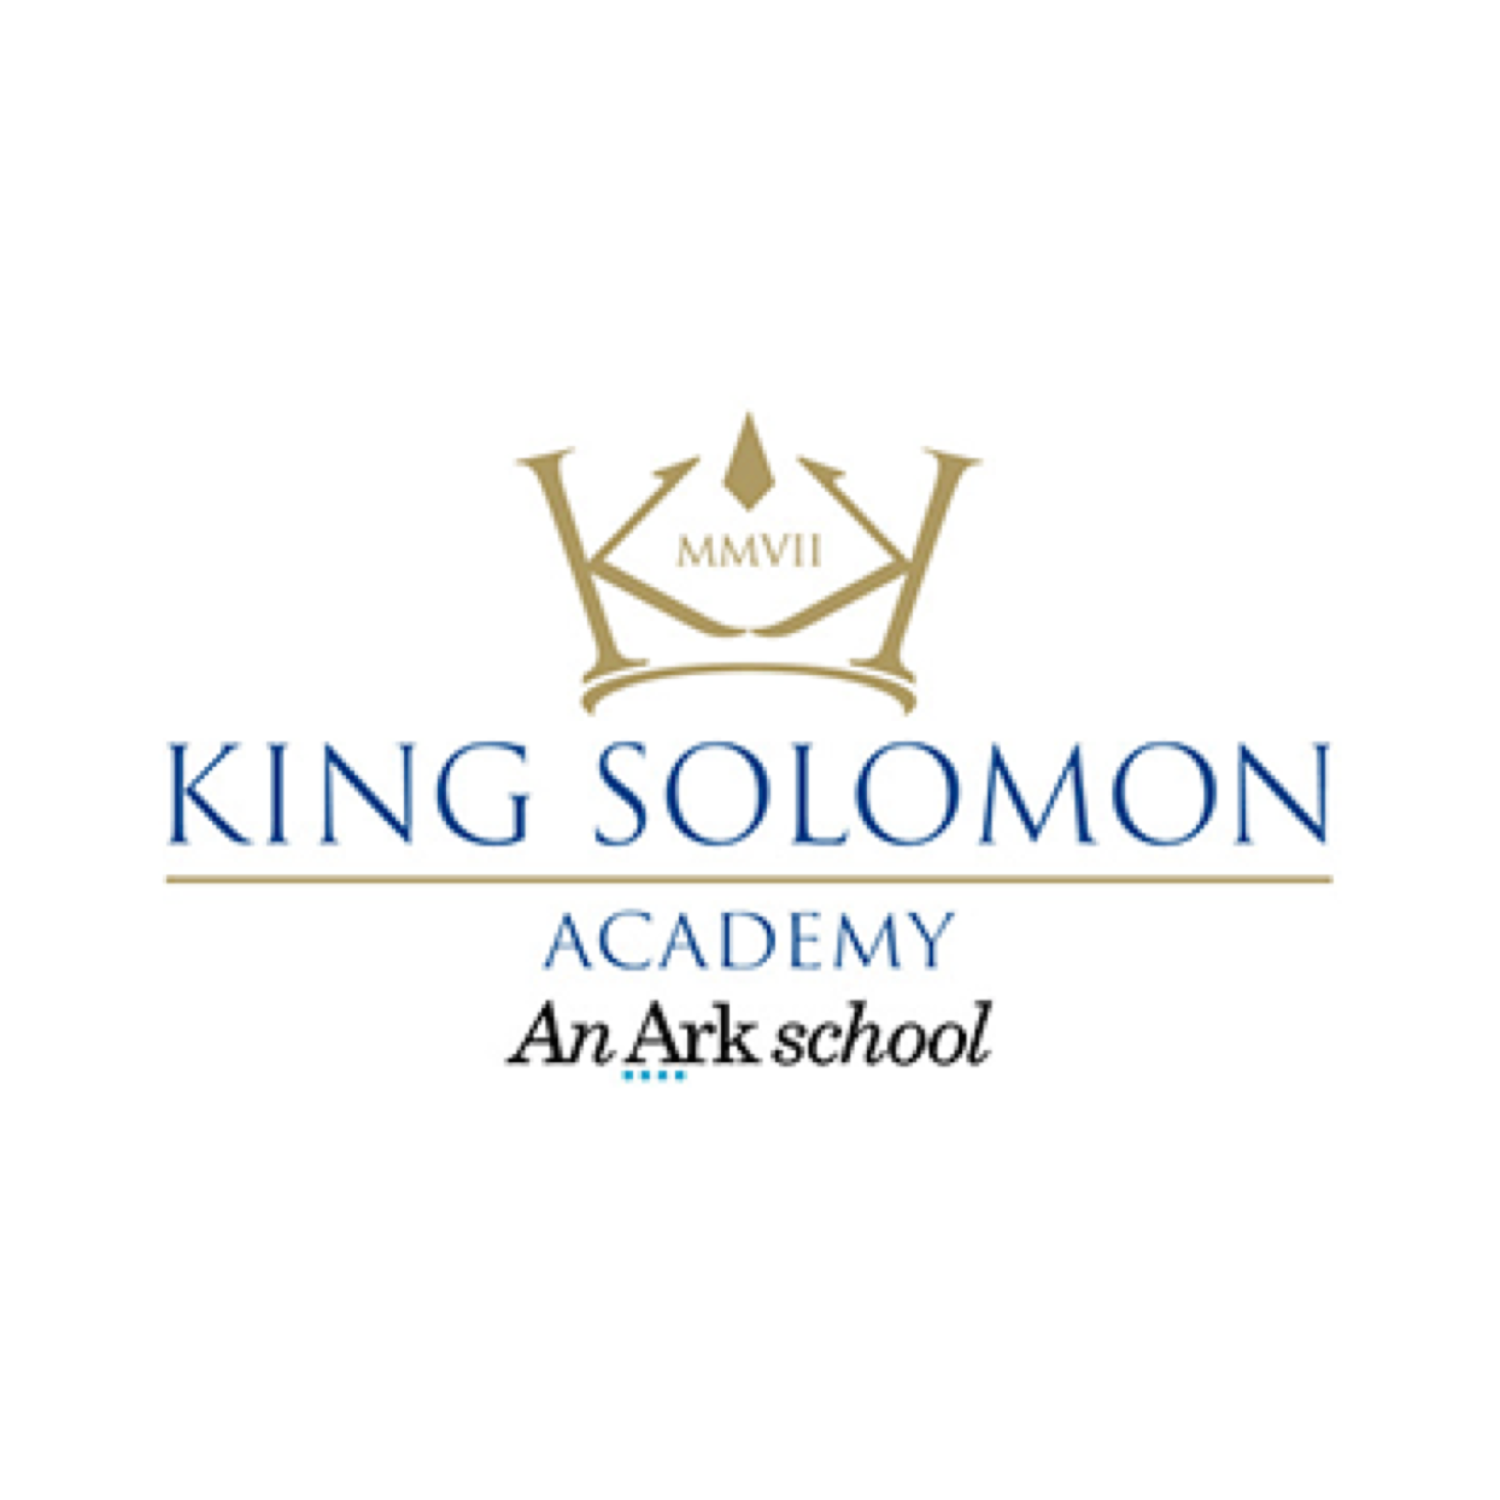 King Solomon Academy logo.png